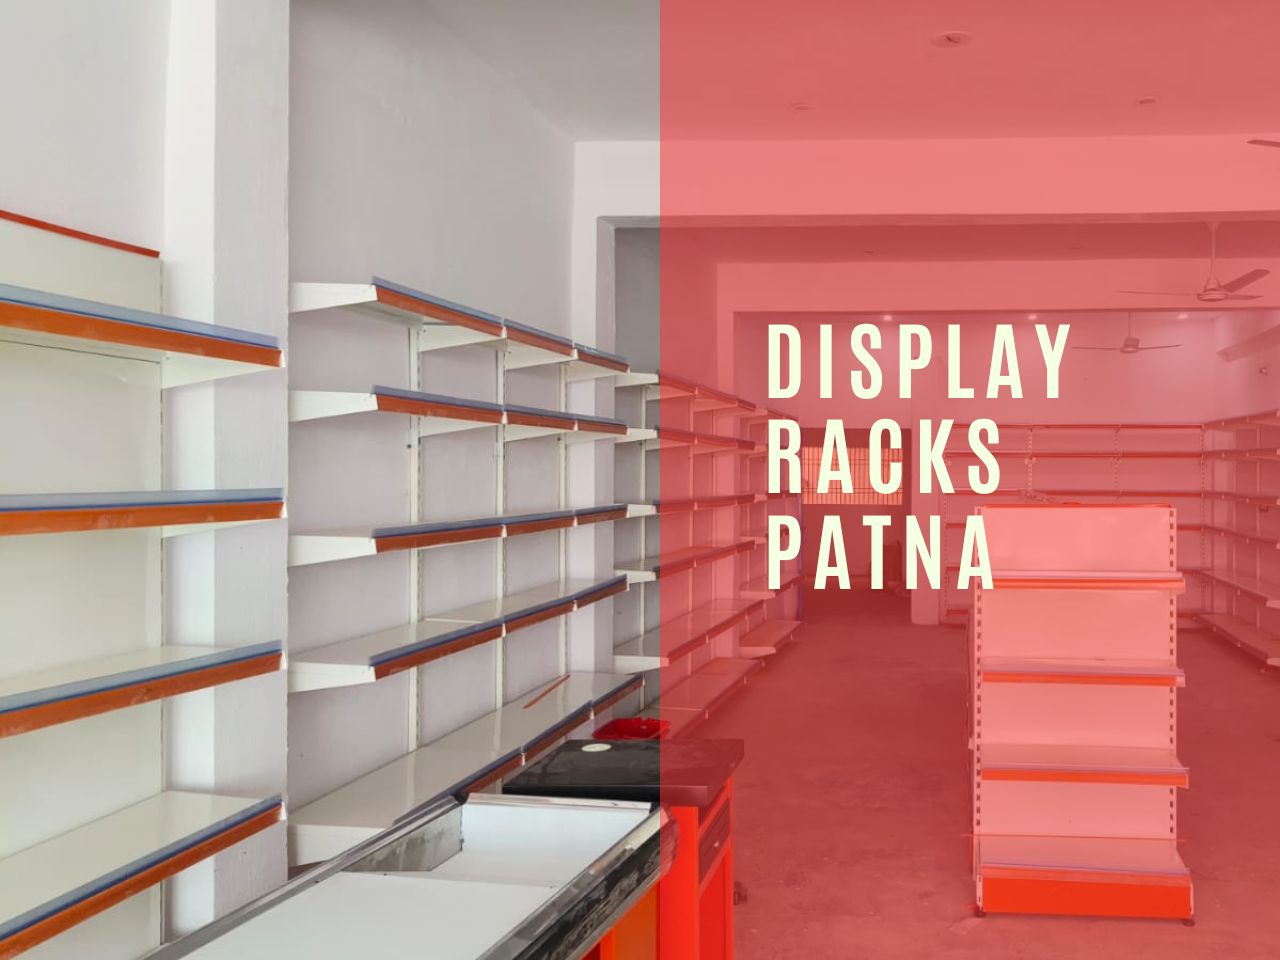 Display racks  Patna.jpg